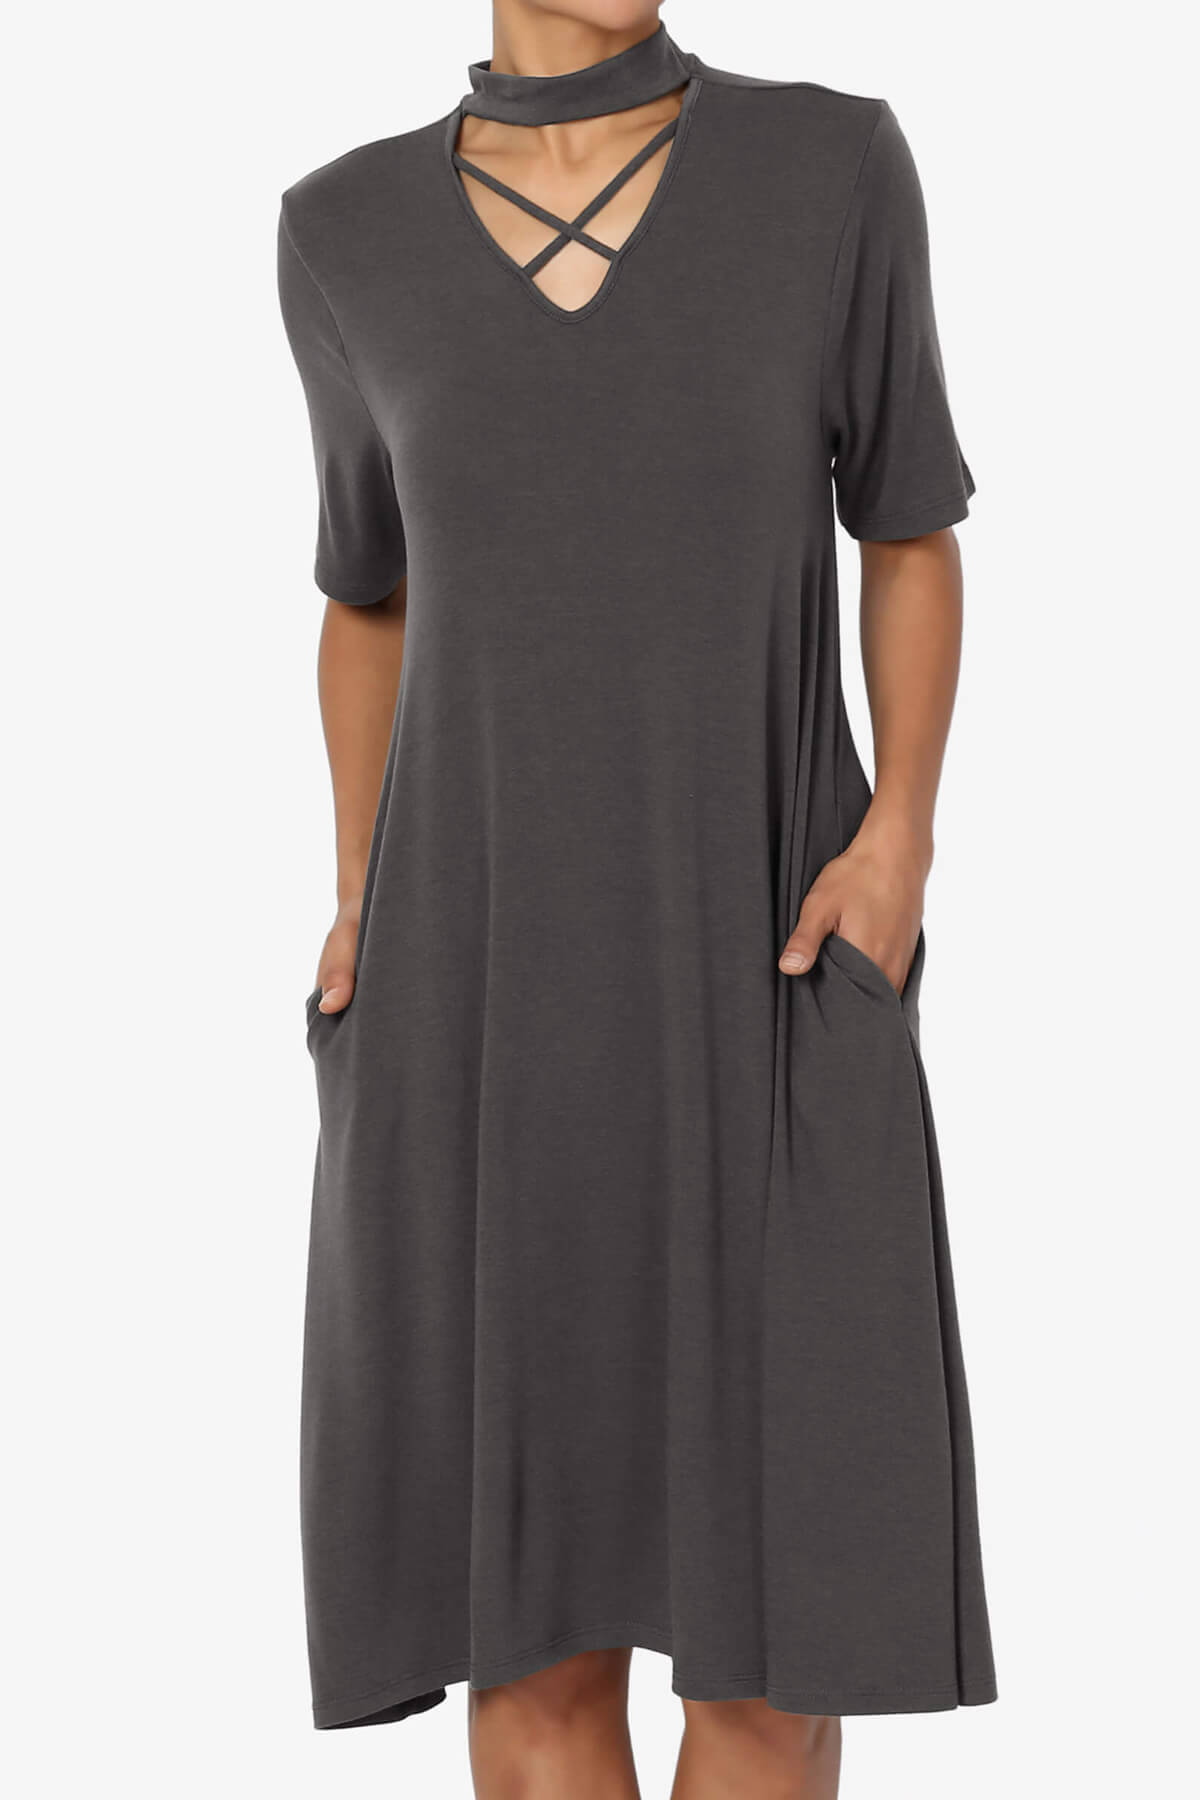 Download TheMogan Missy Cross Mock Neck Short Sleeve Flowy Swing Pocket T-Shirt Dress | eBay